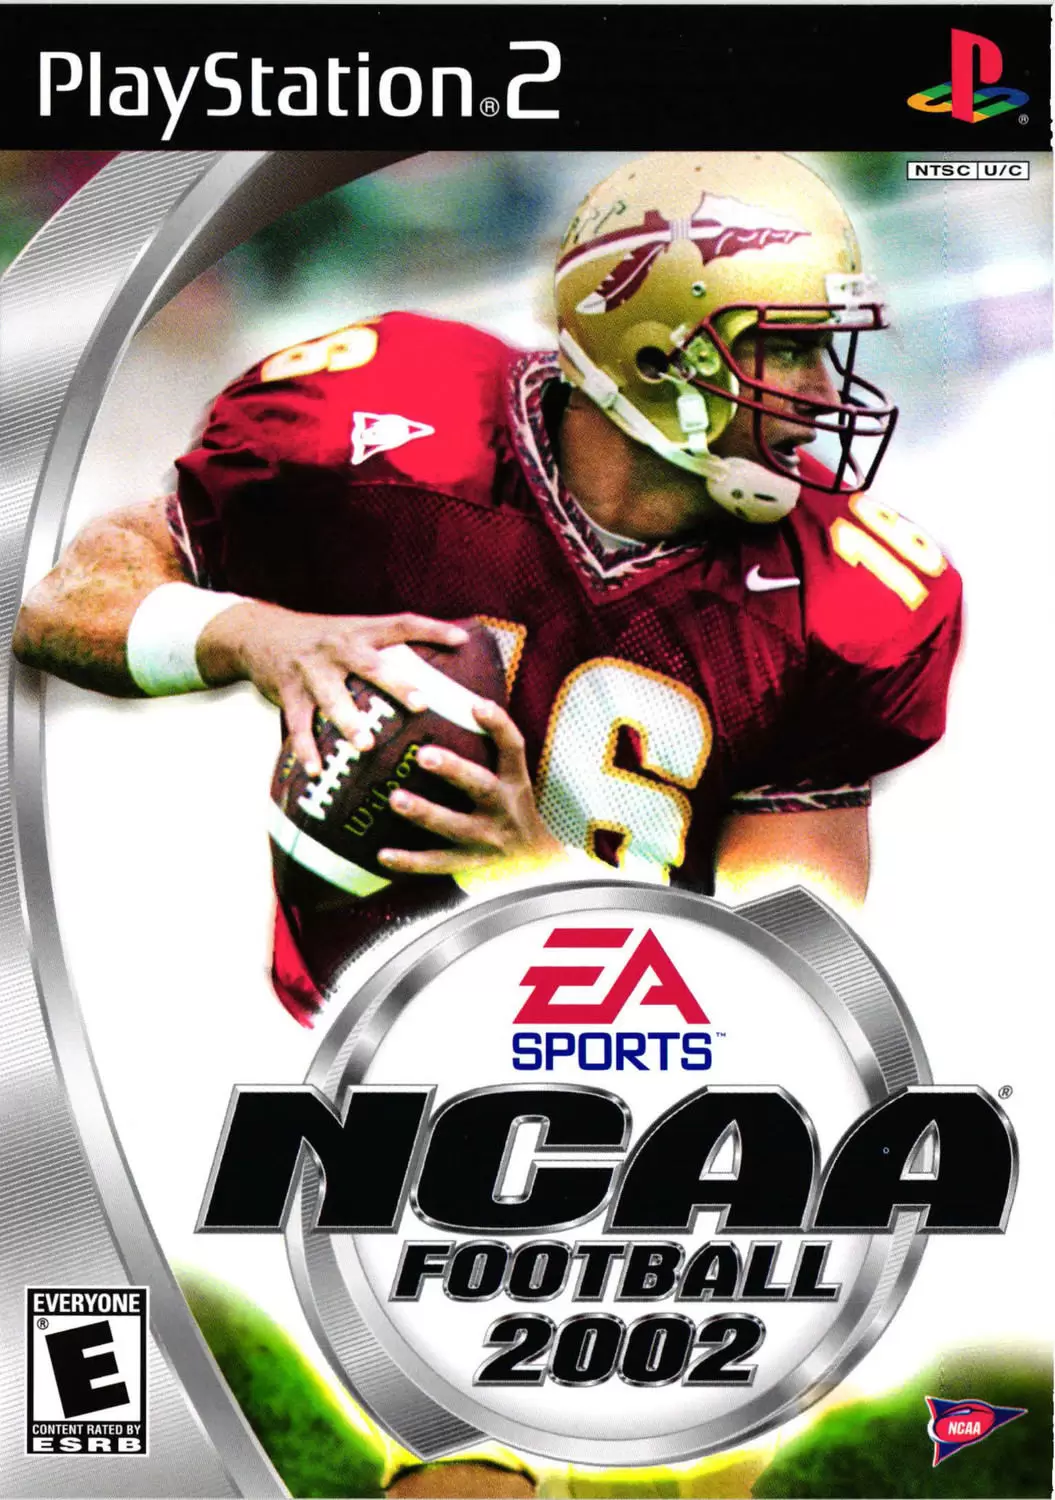 PS2 Games - NCAA Football 2002